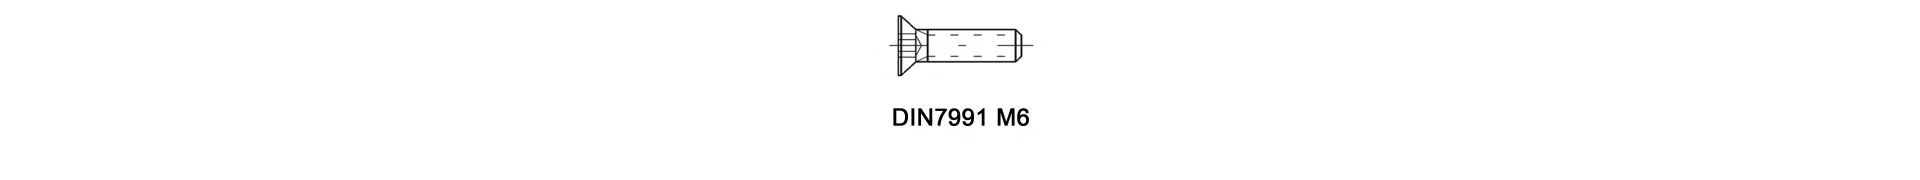 DIN7991 M6